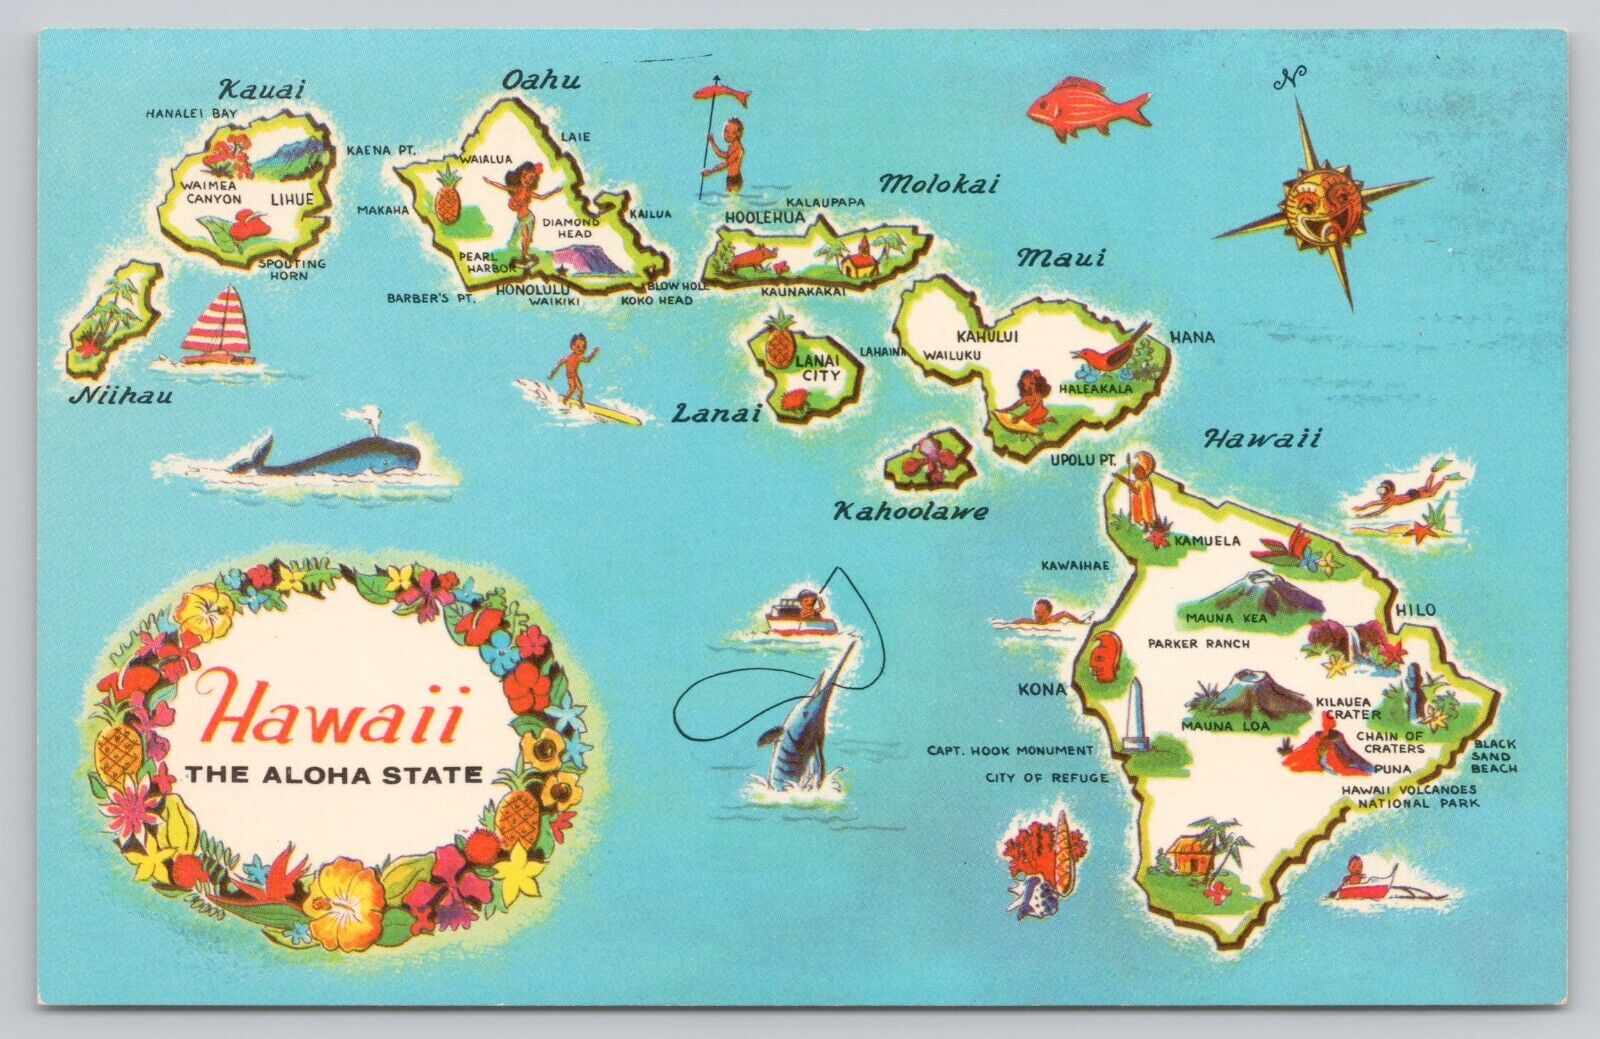 Hawaii State Pictoral Map, Landmarks & Attractions, Islands, Vintage Postcard